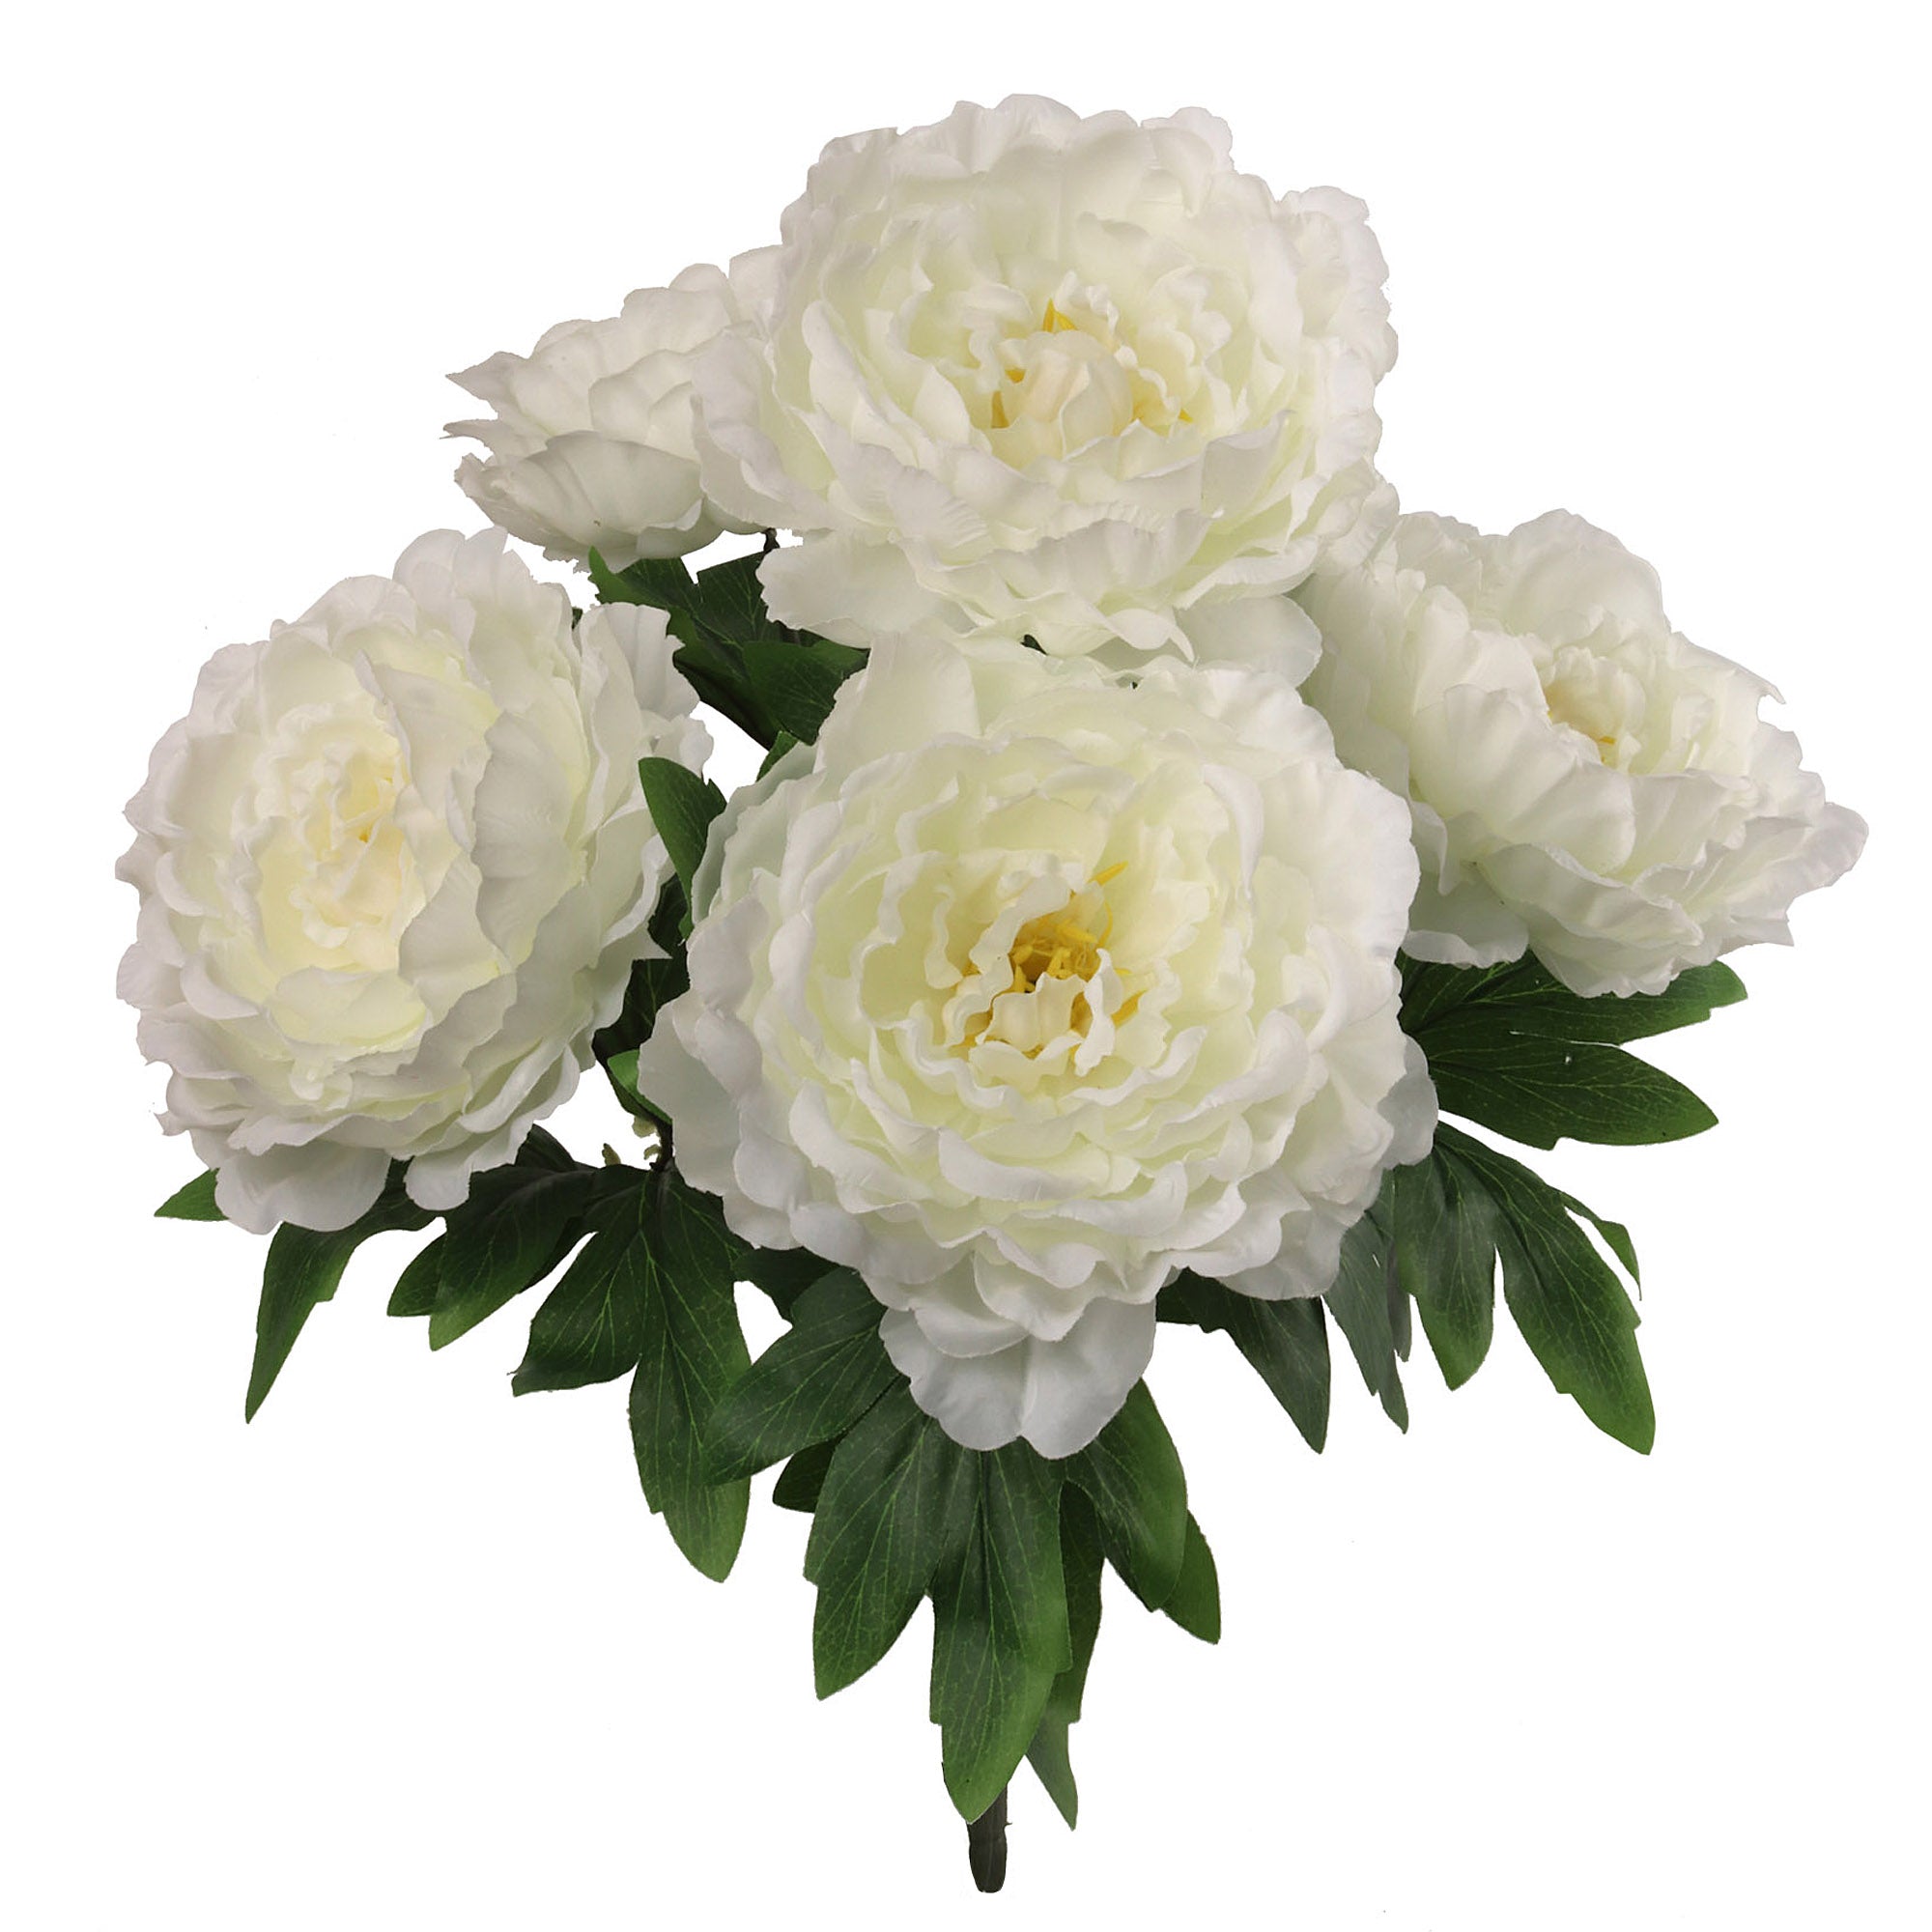 Elegant 20"" White Peony Bush X5 - Artificial Flowers for Home Decor, Wedding Bouquets, and Floral Arrangements